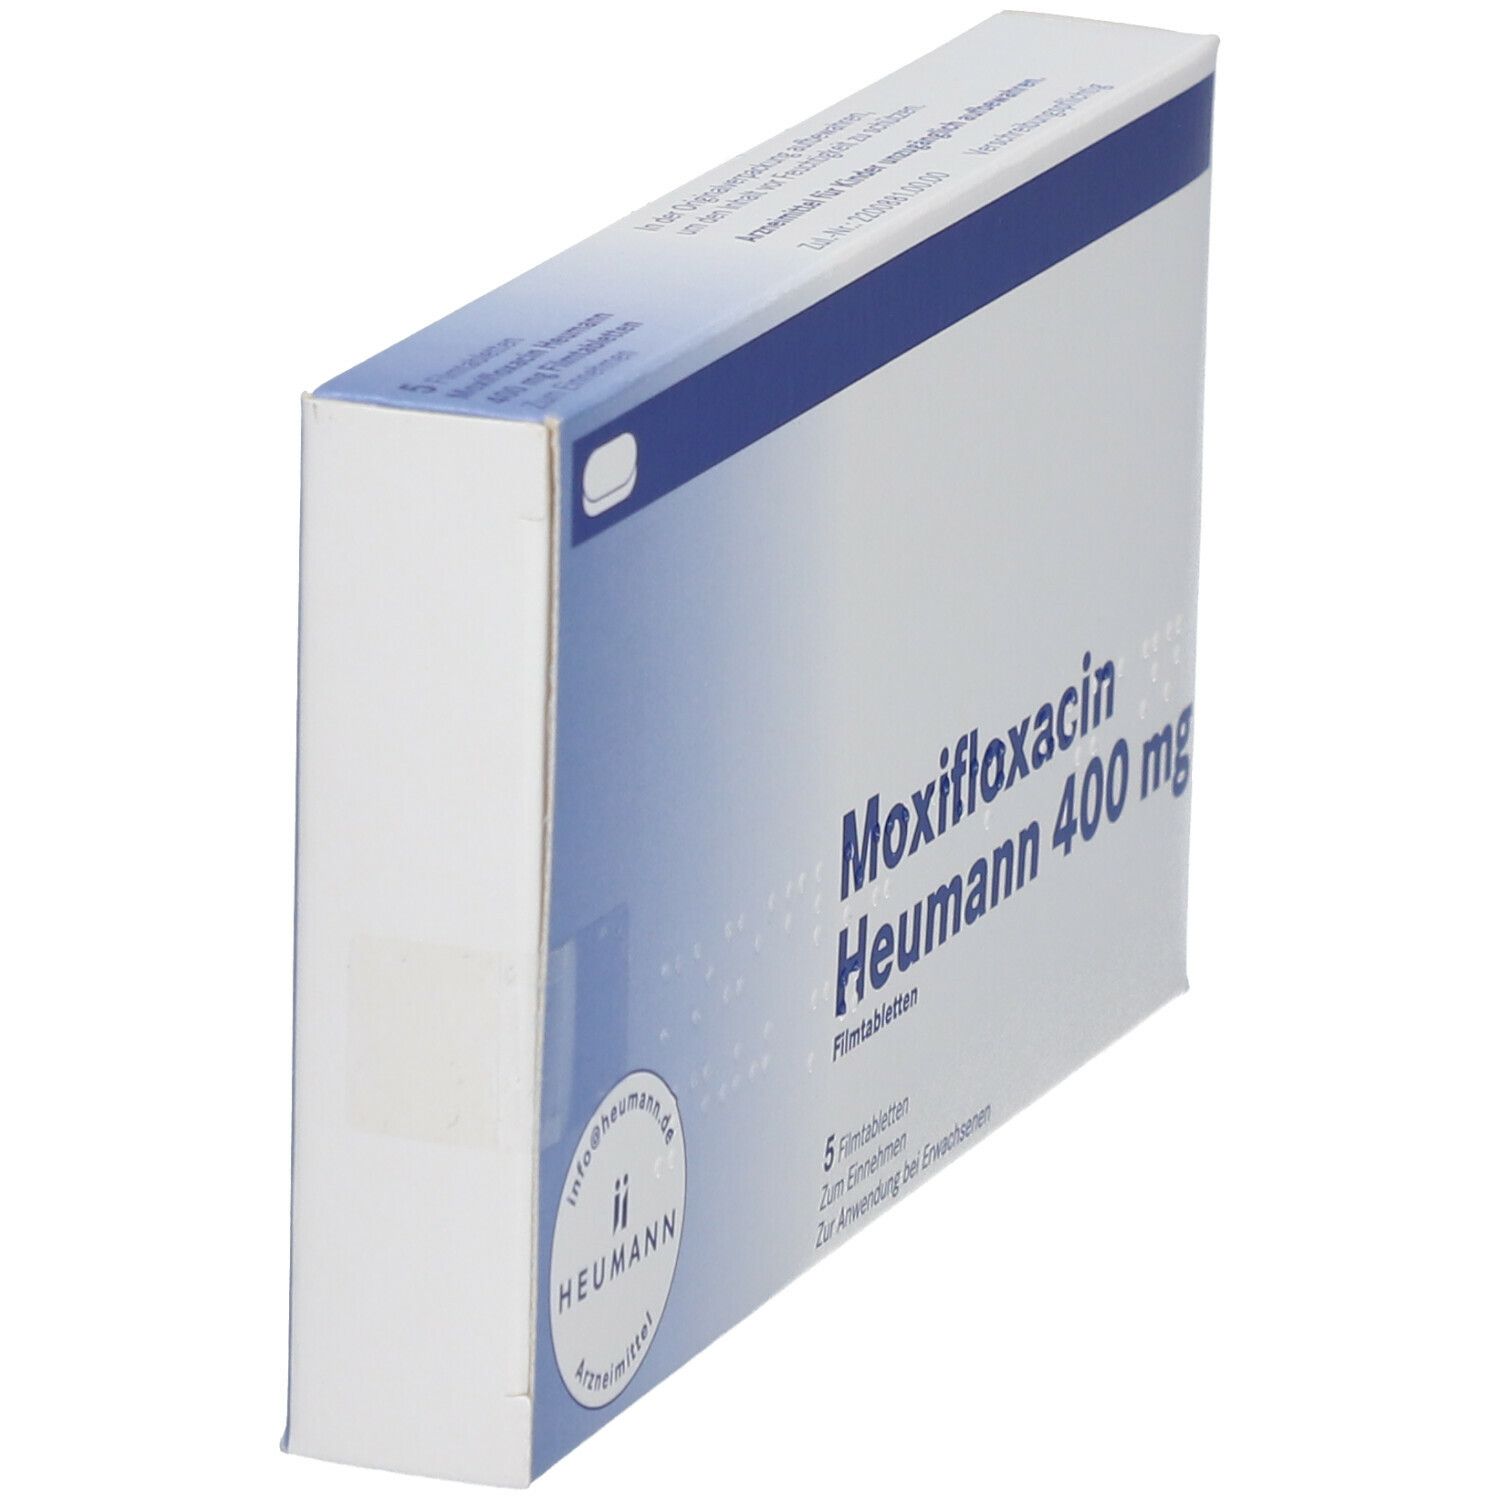 Moxifloxacin Heumann 400 mg